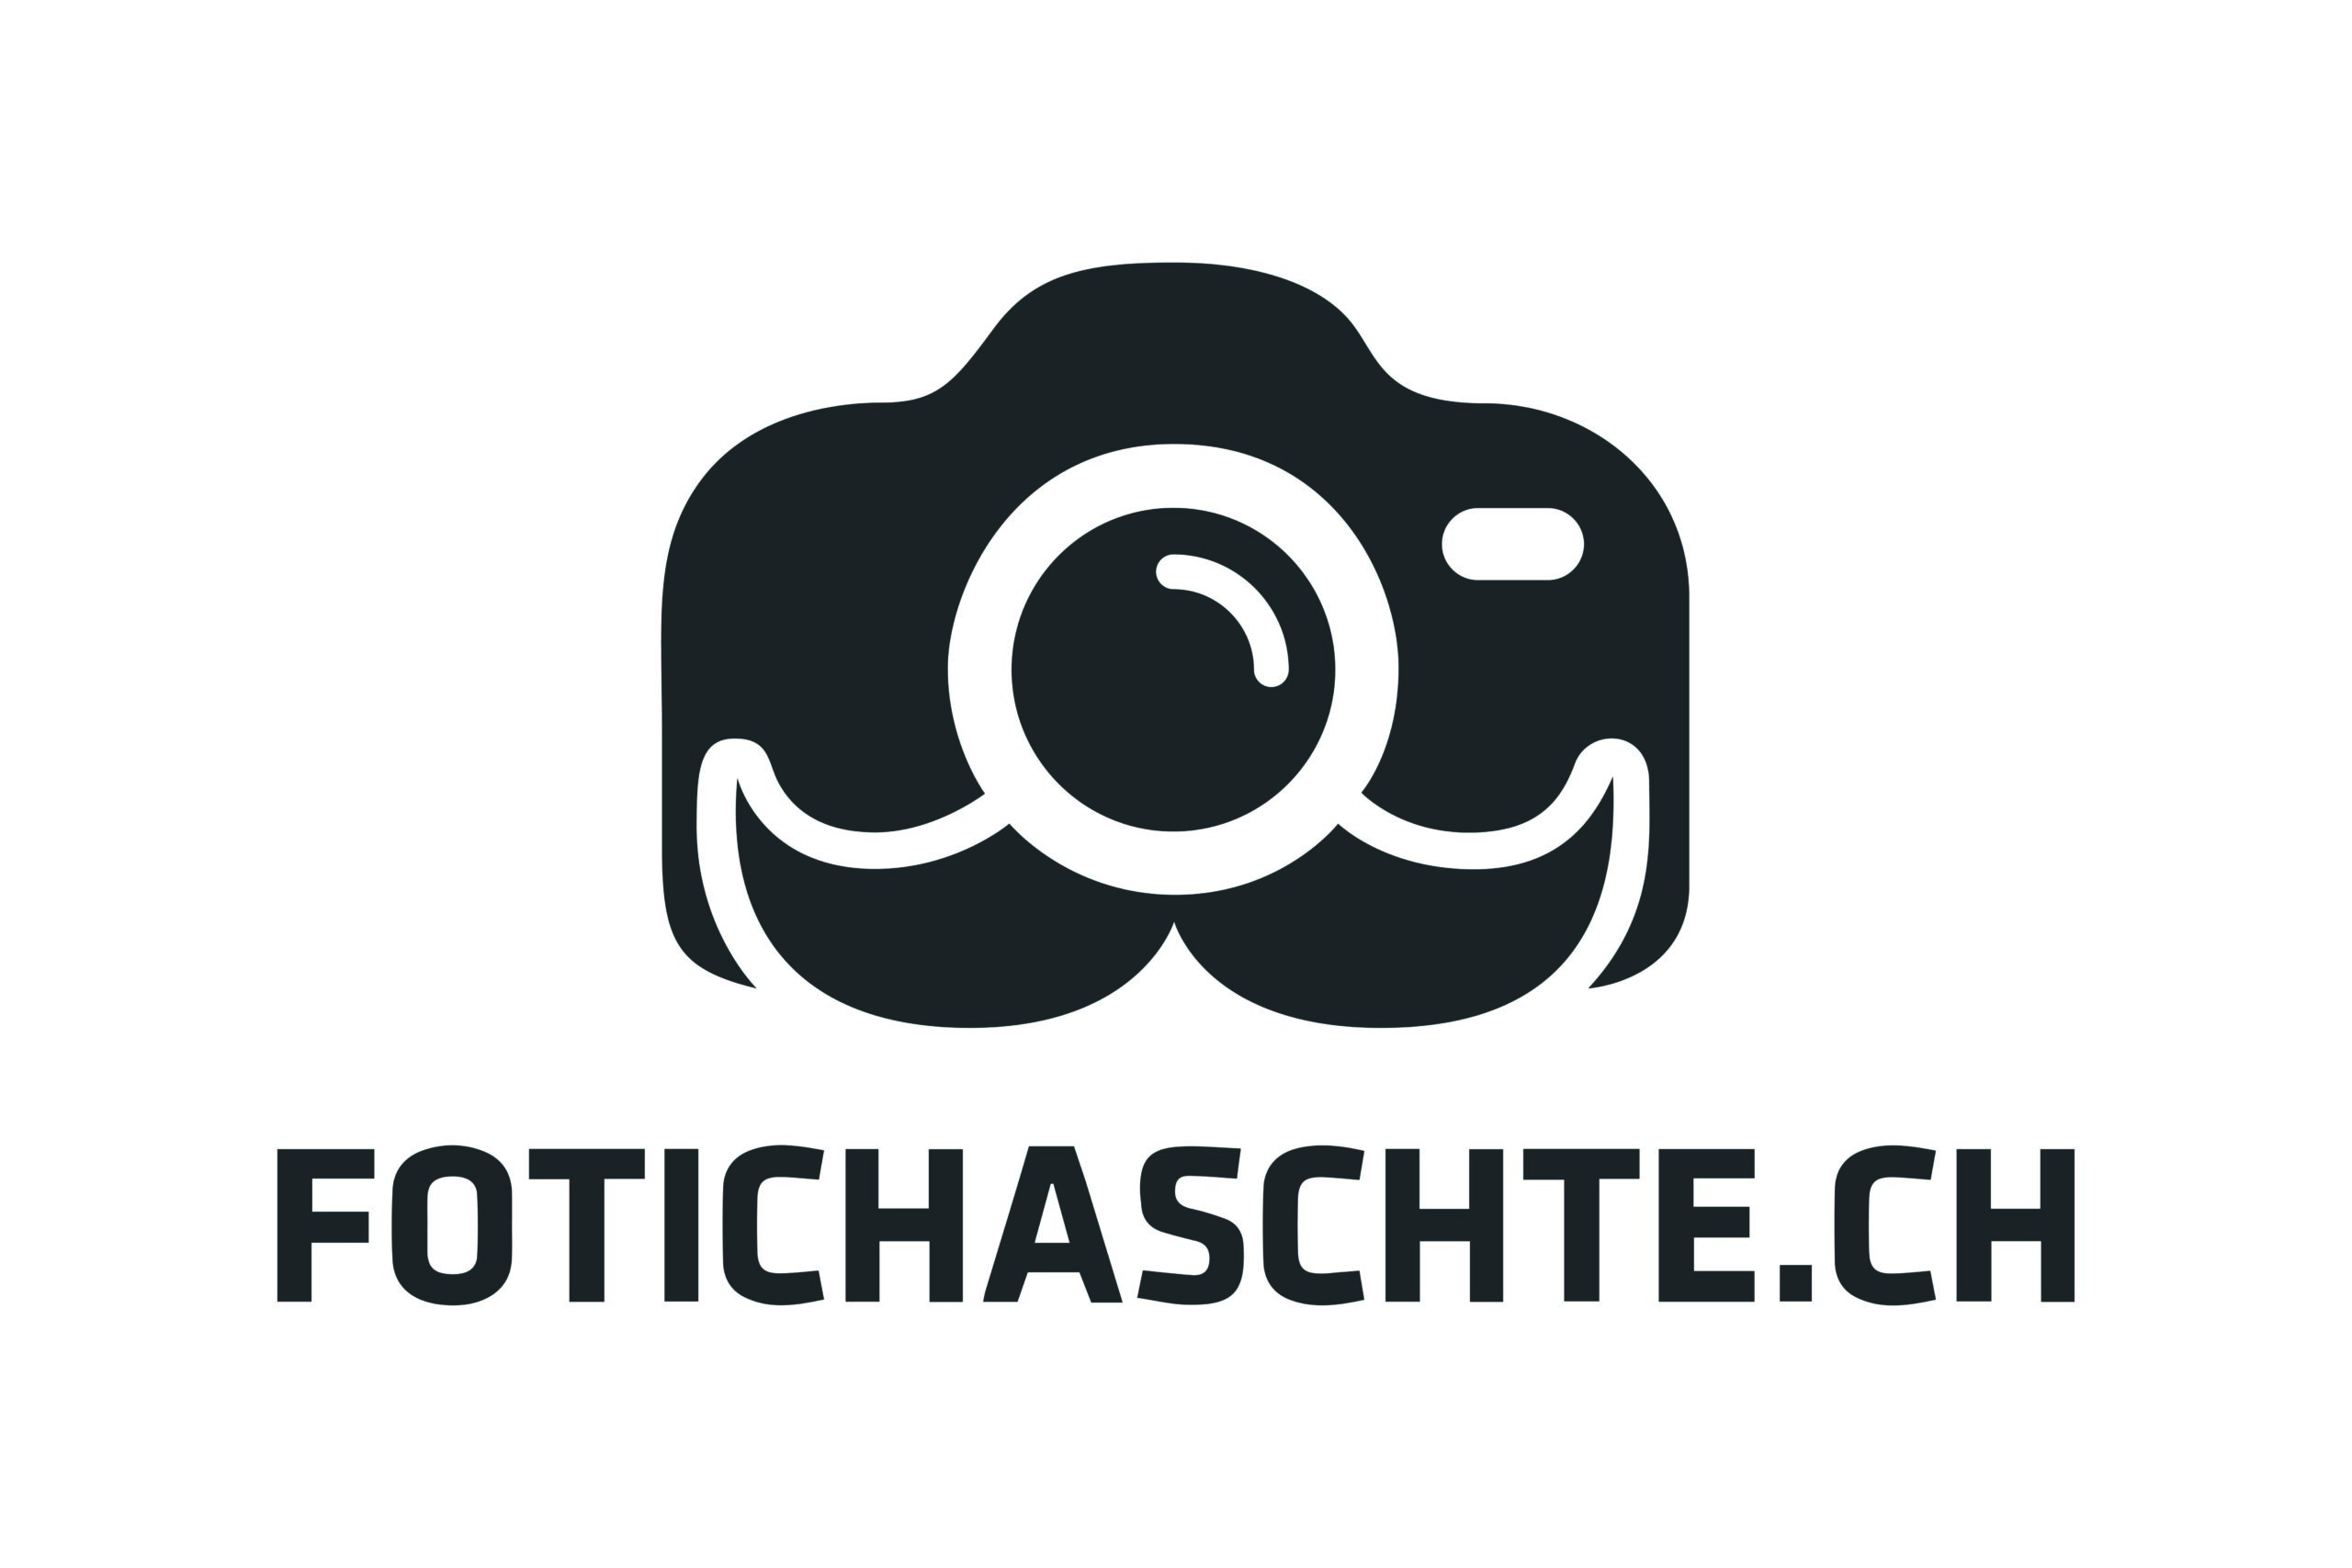 Fotichaschte.ch